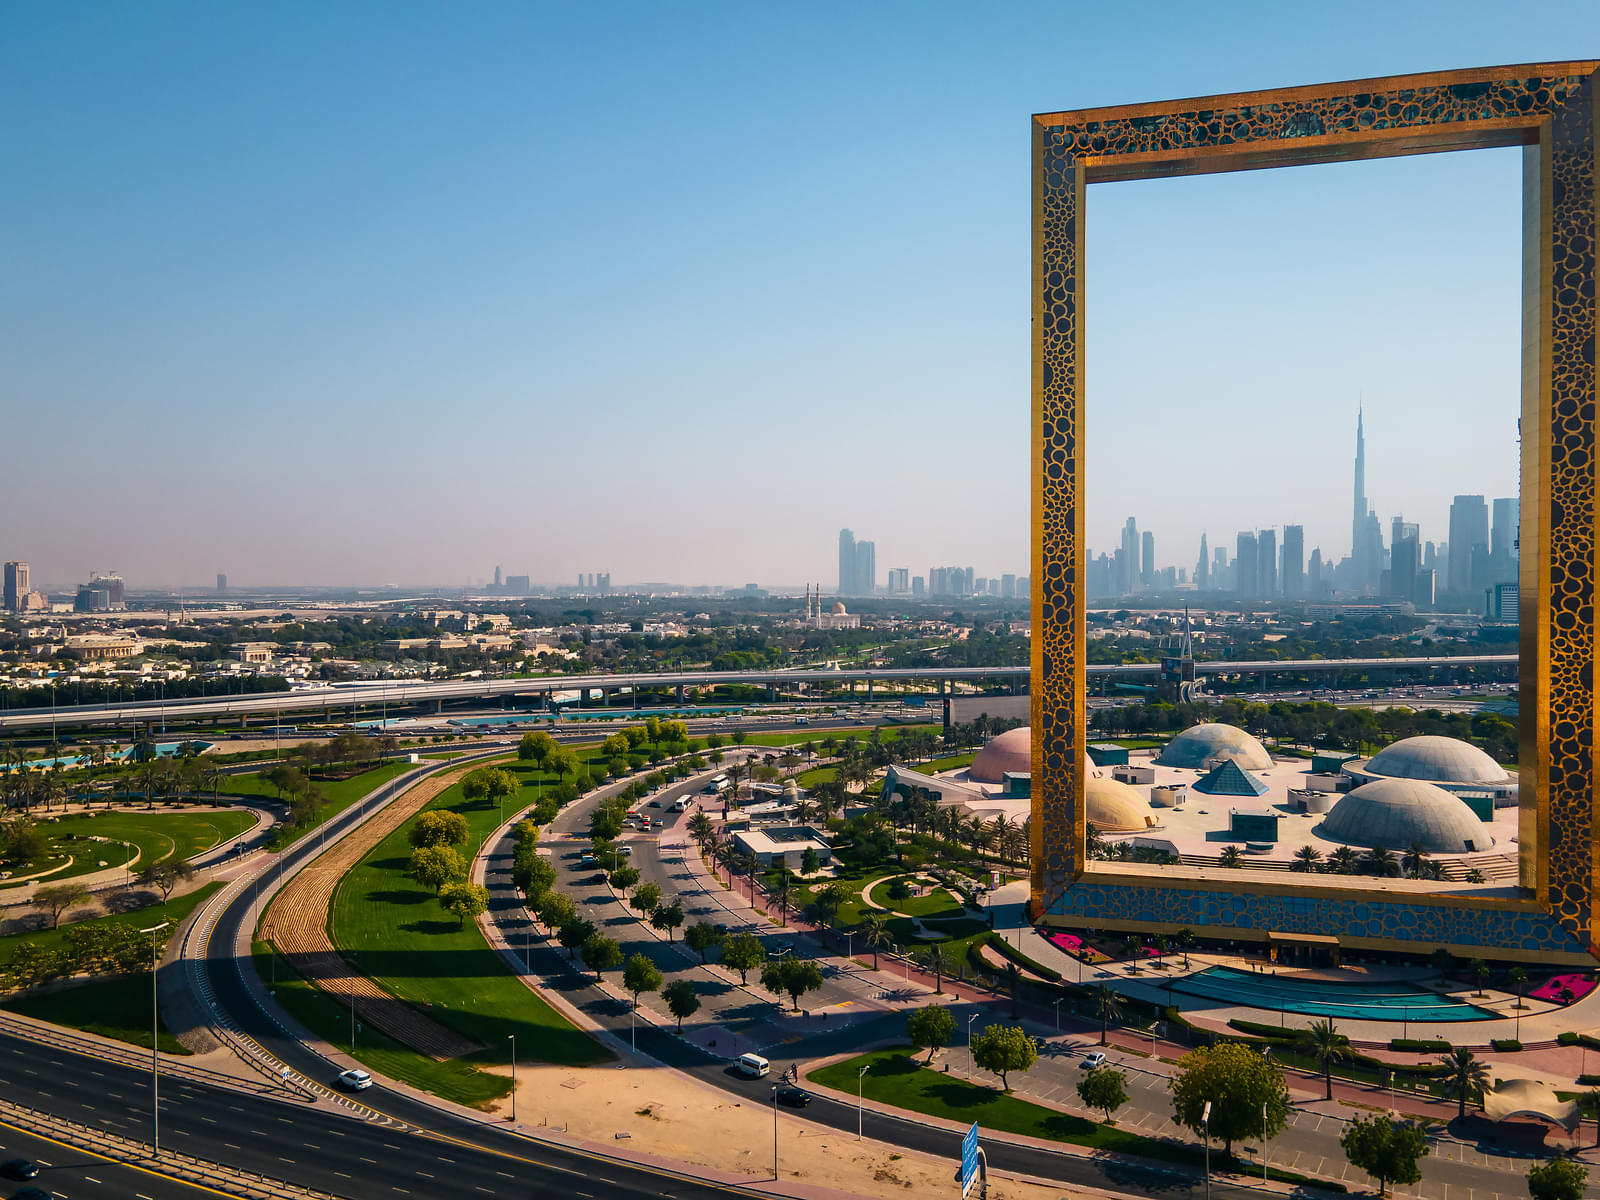 A bird's eye view of the iconic Dubai Frame